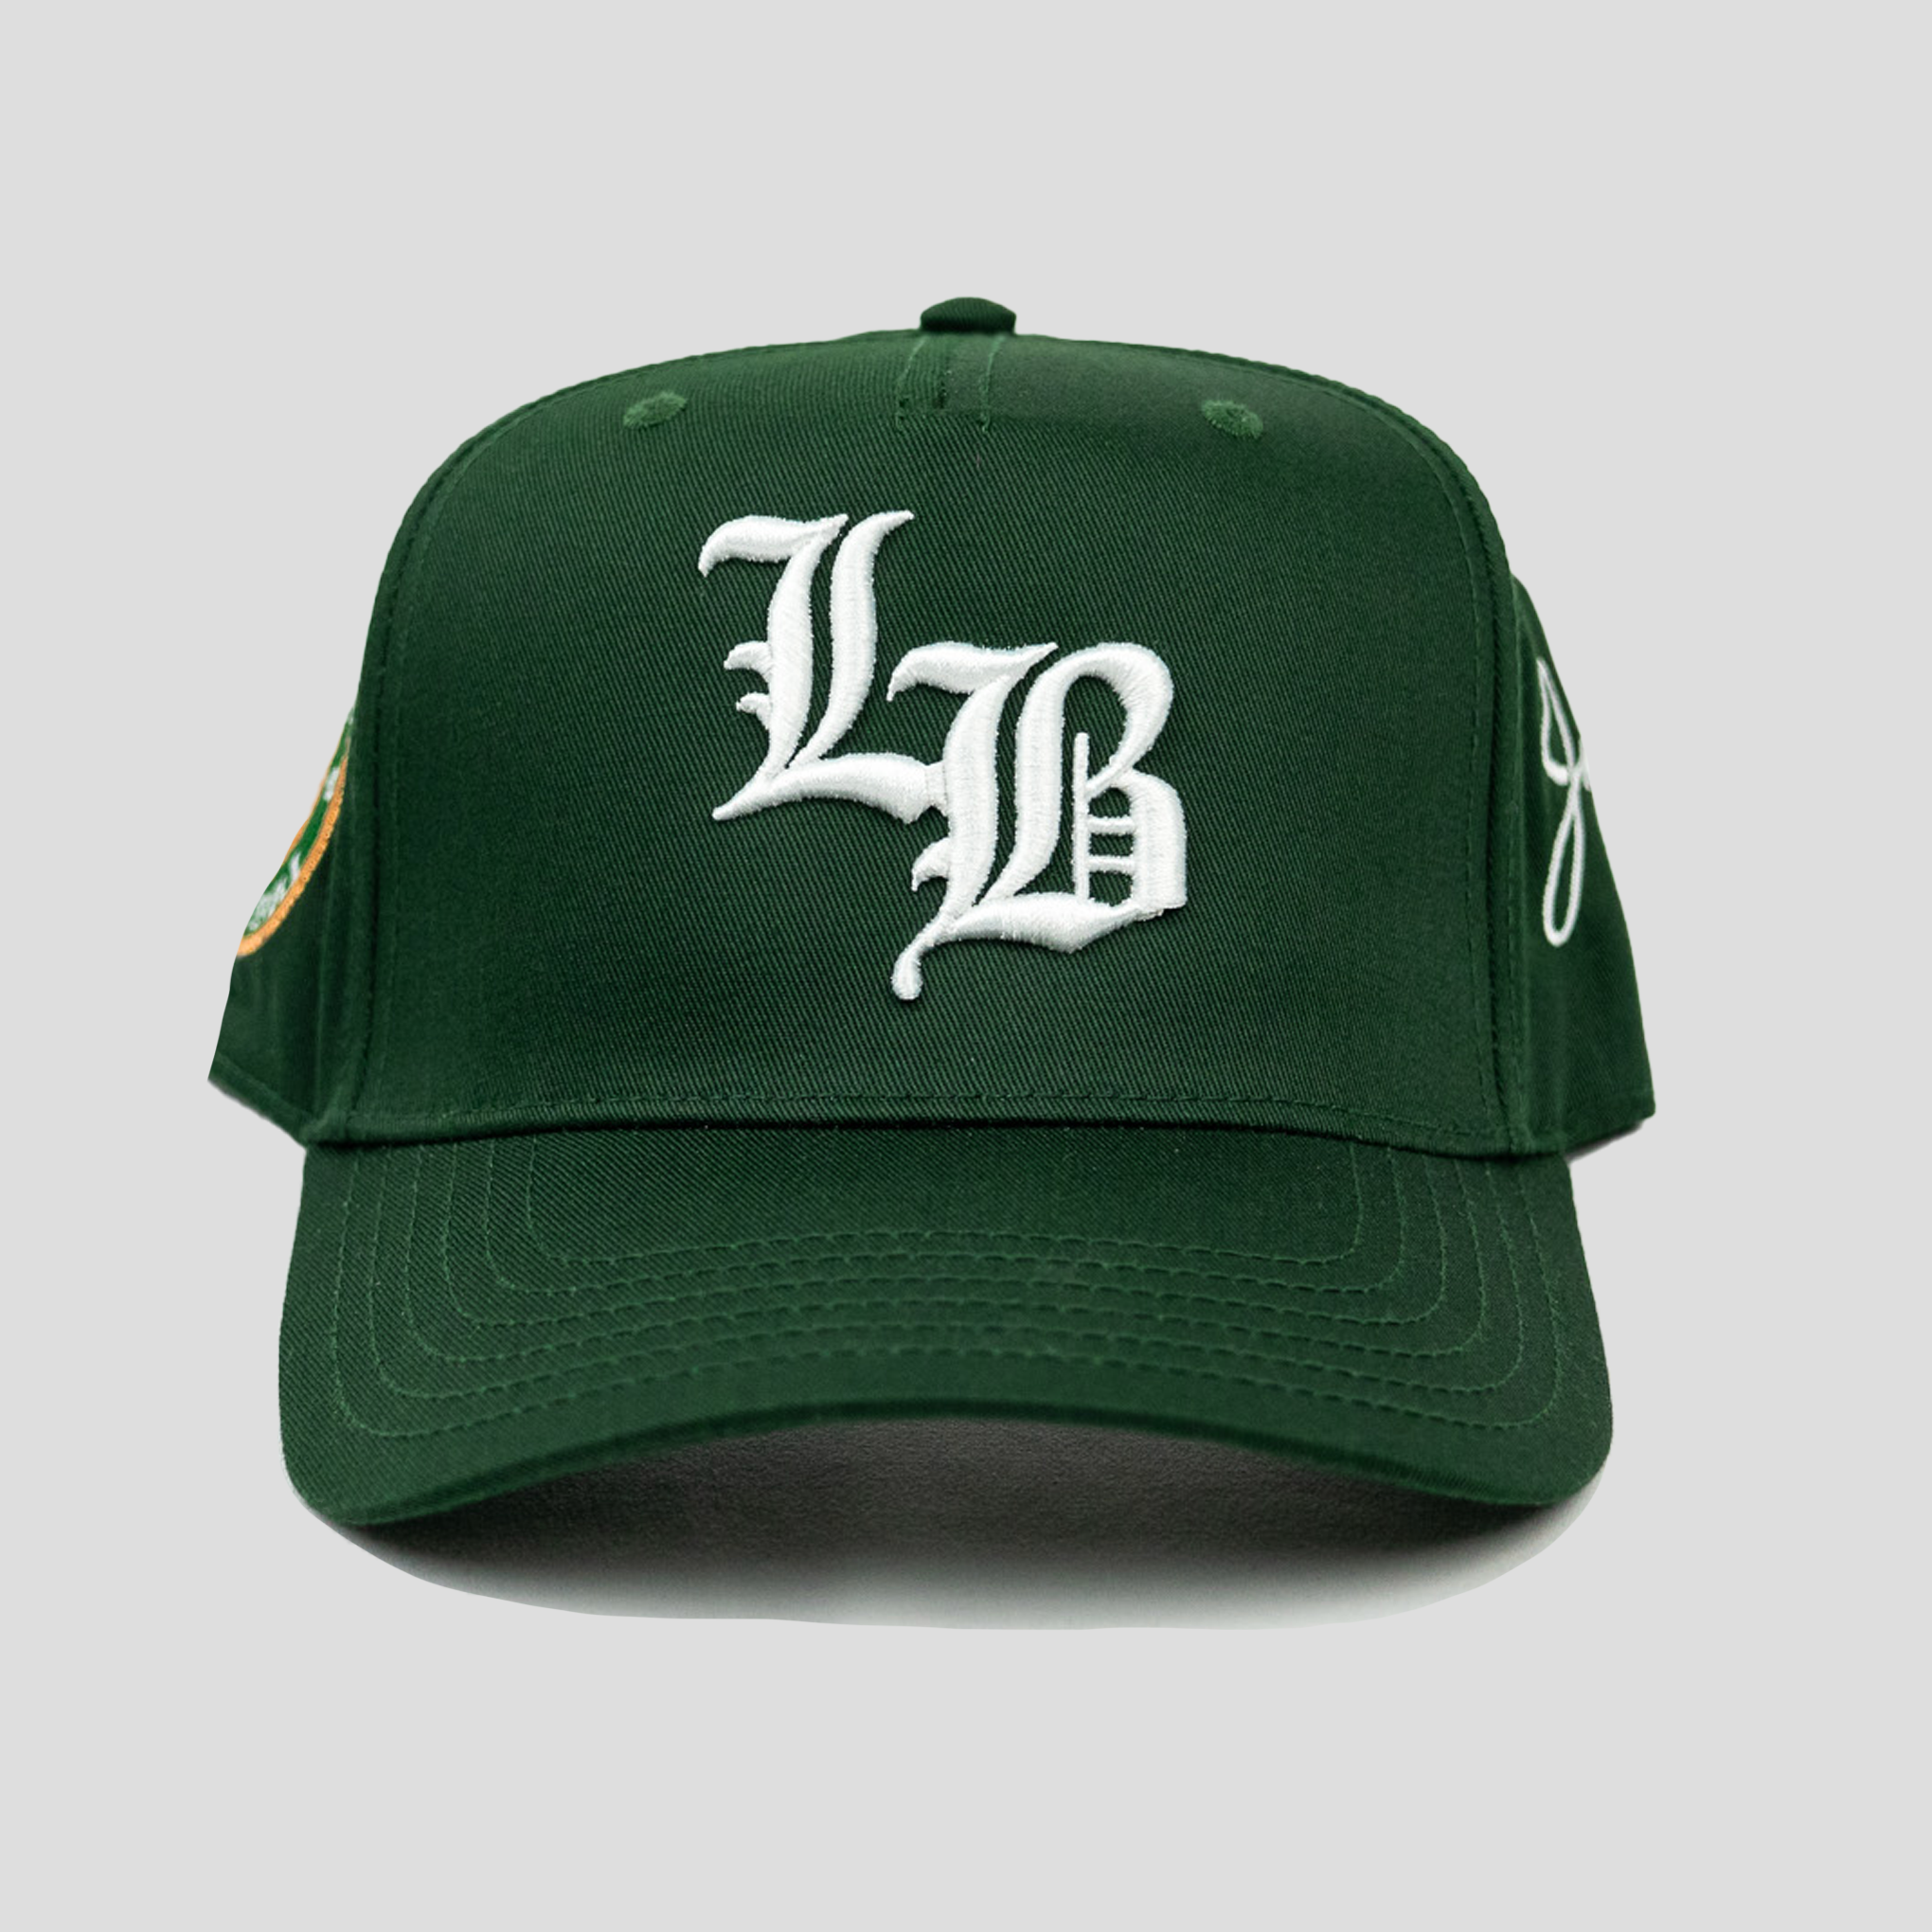 Jrip x LB Snapback Hat (DARK GREEN/WHITE)